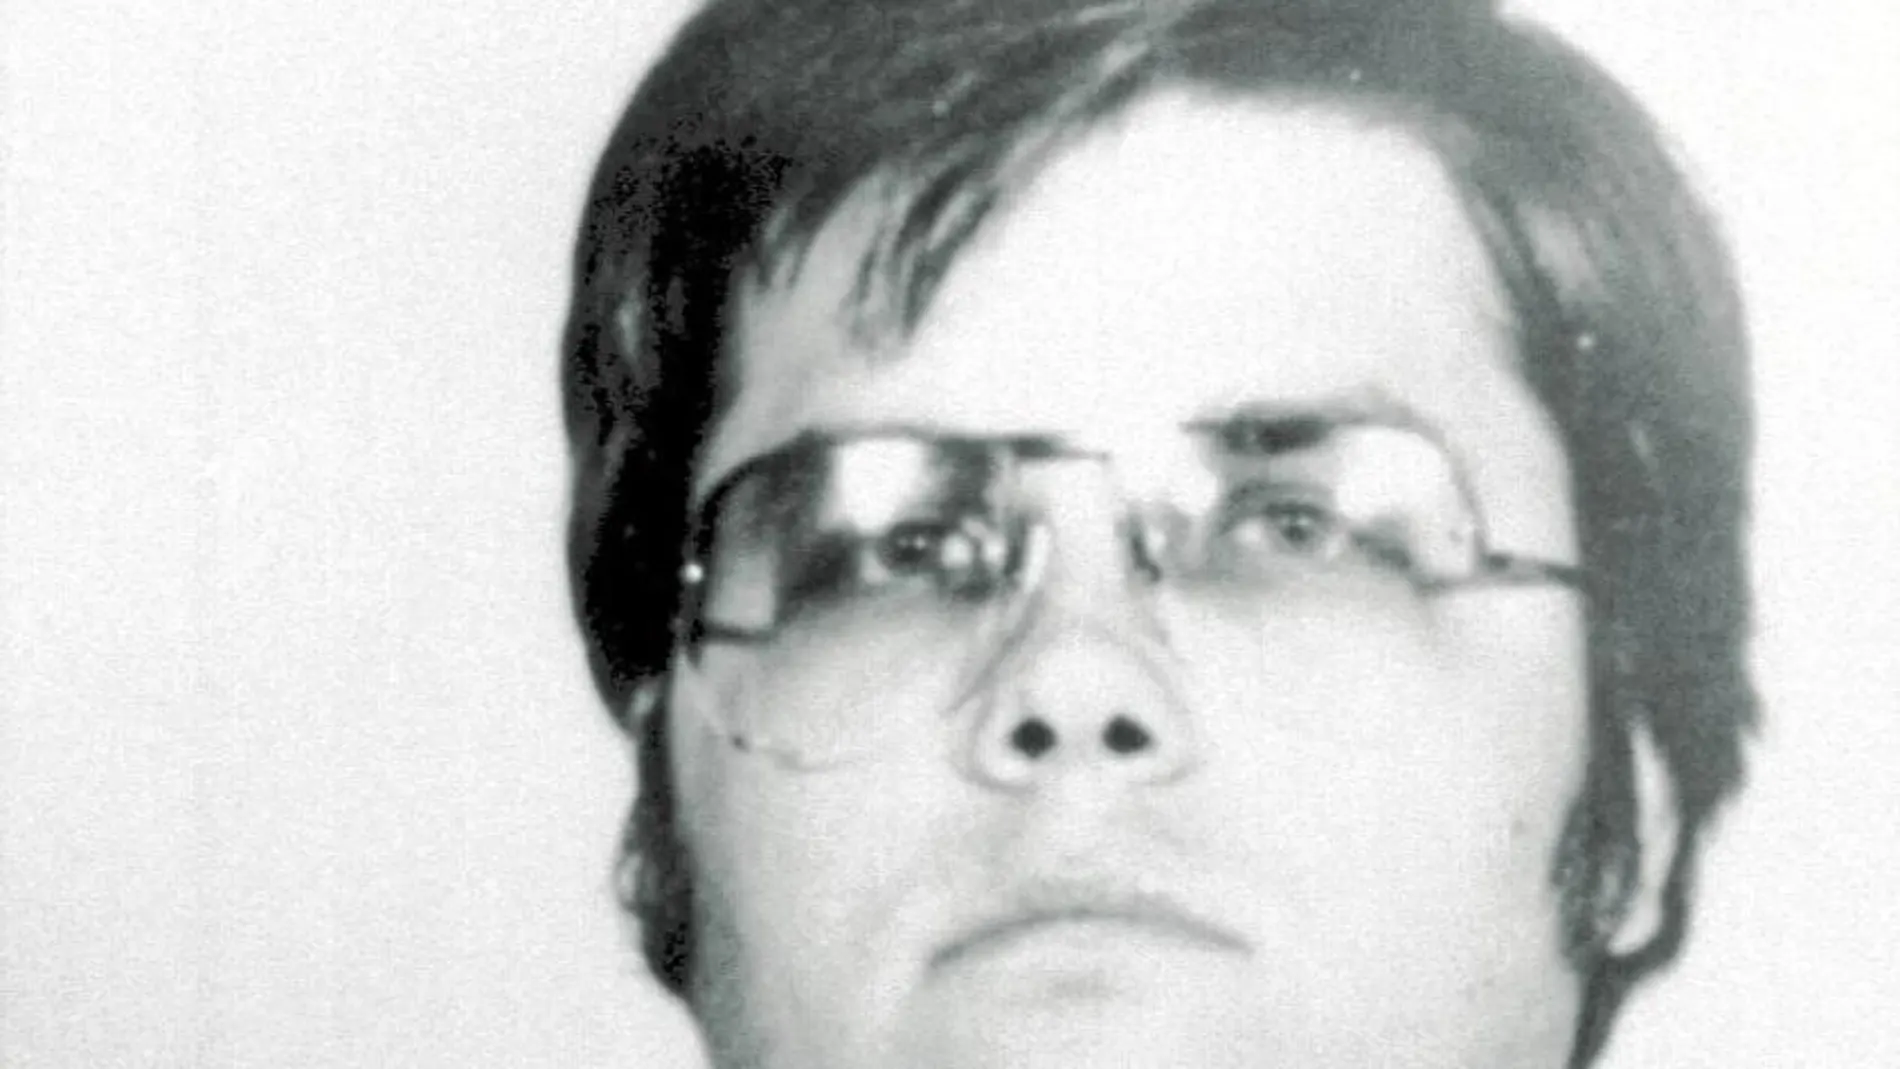 Chapman, fichado por la policía después de matar a Jonn Lennon en diciembre de 1980